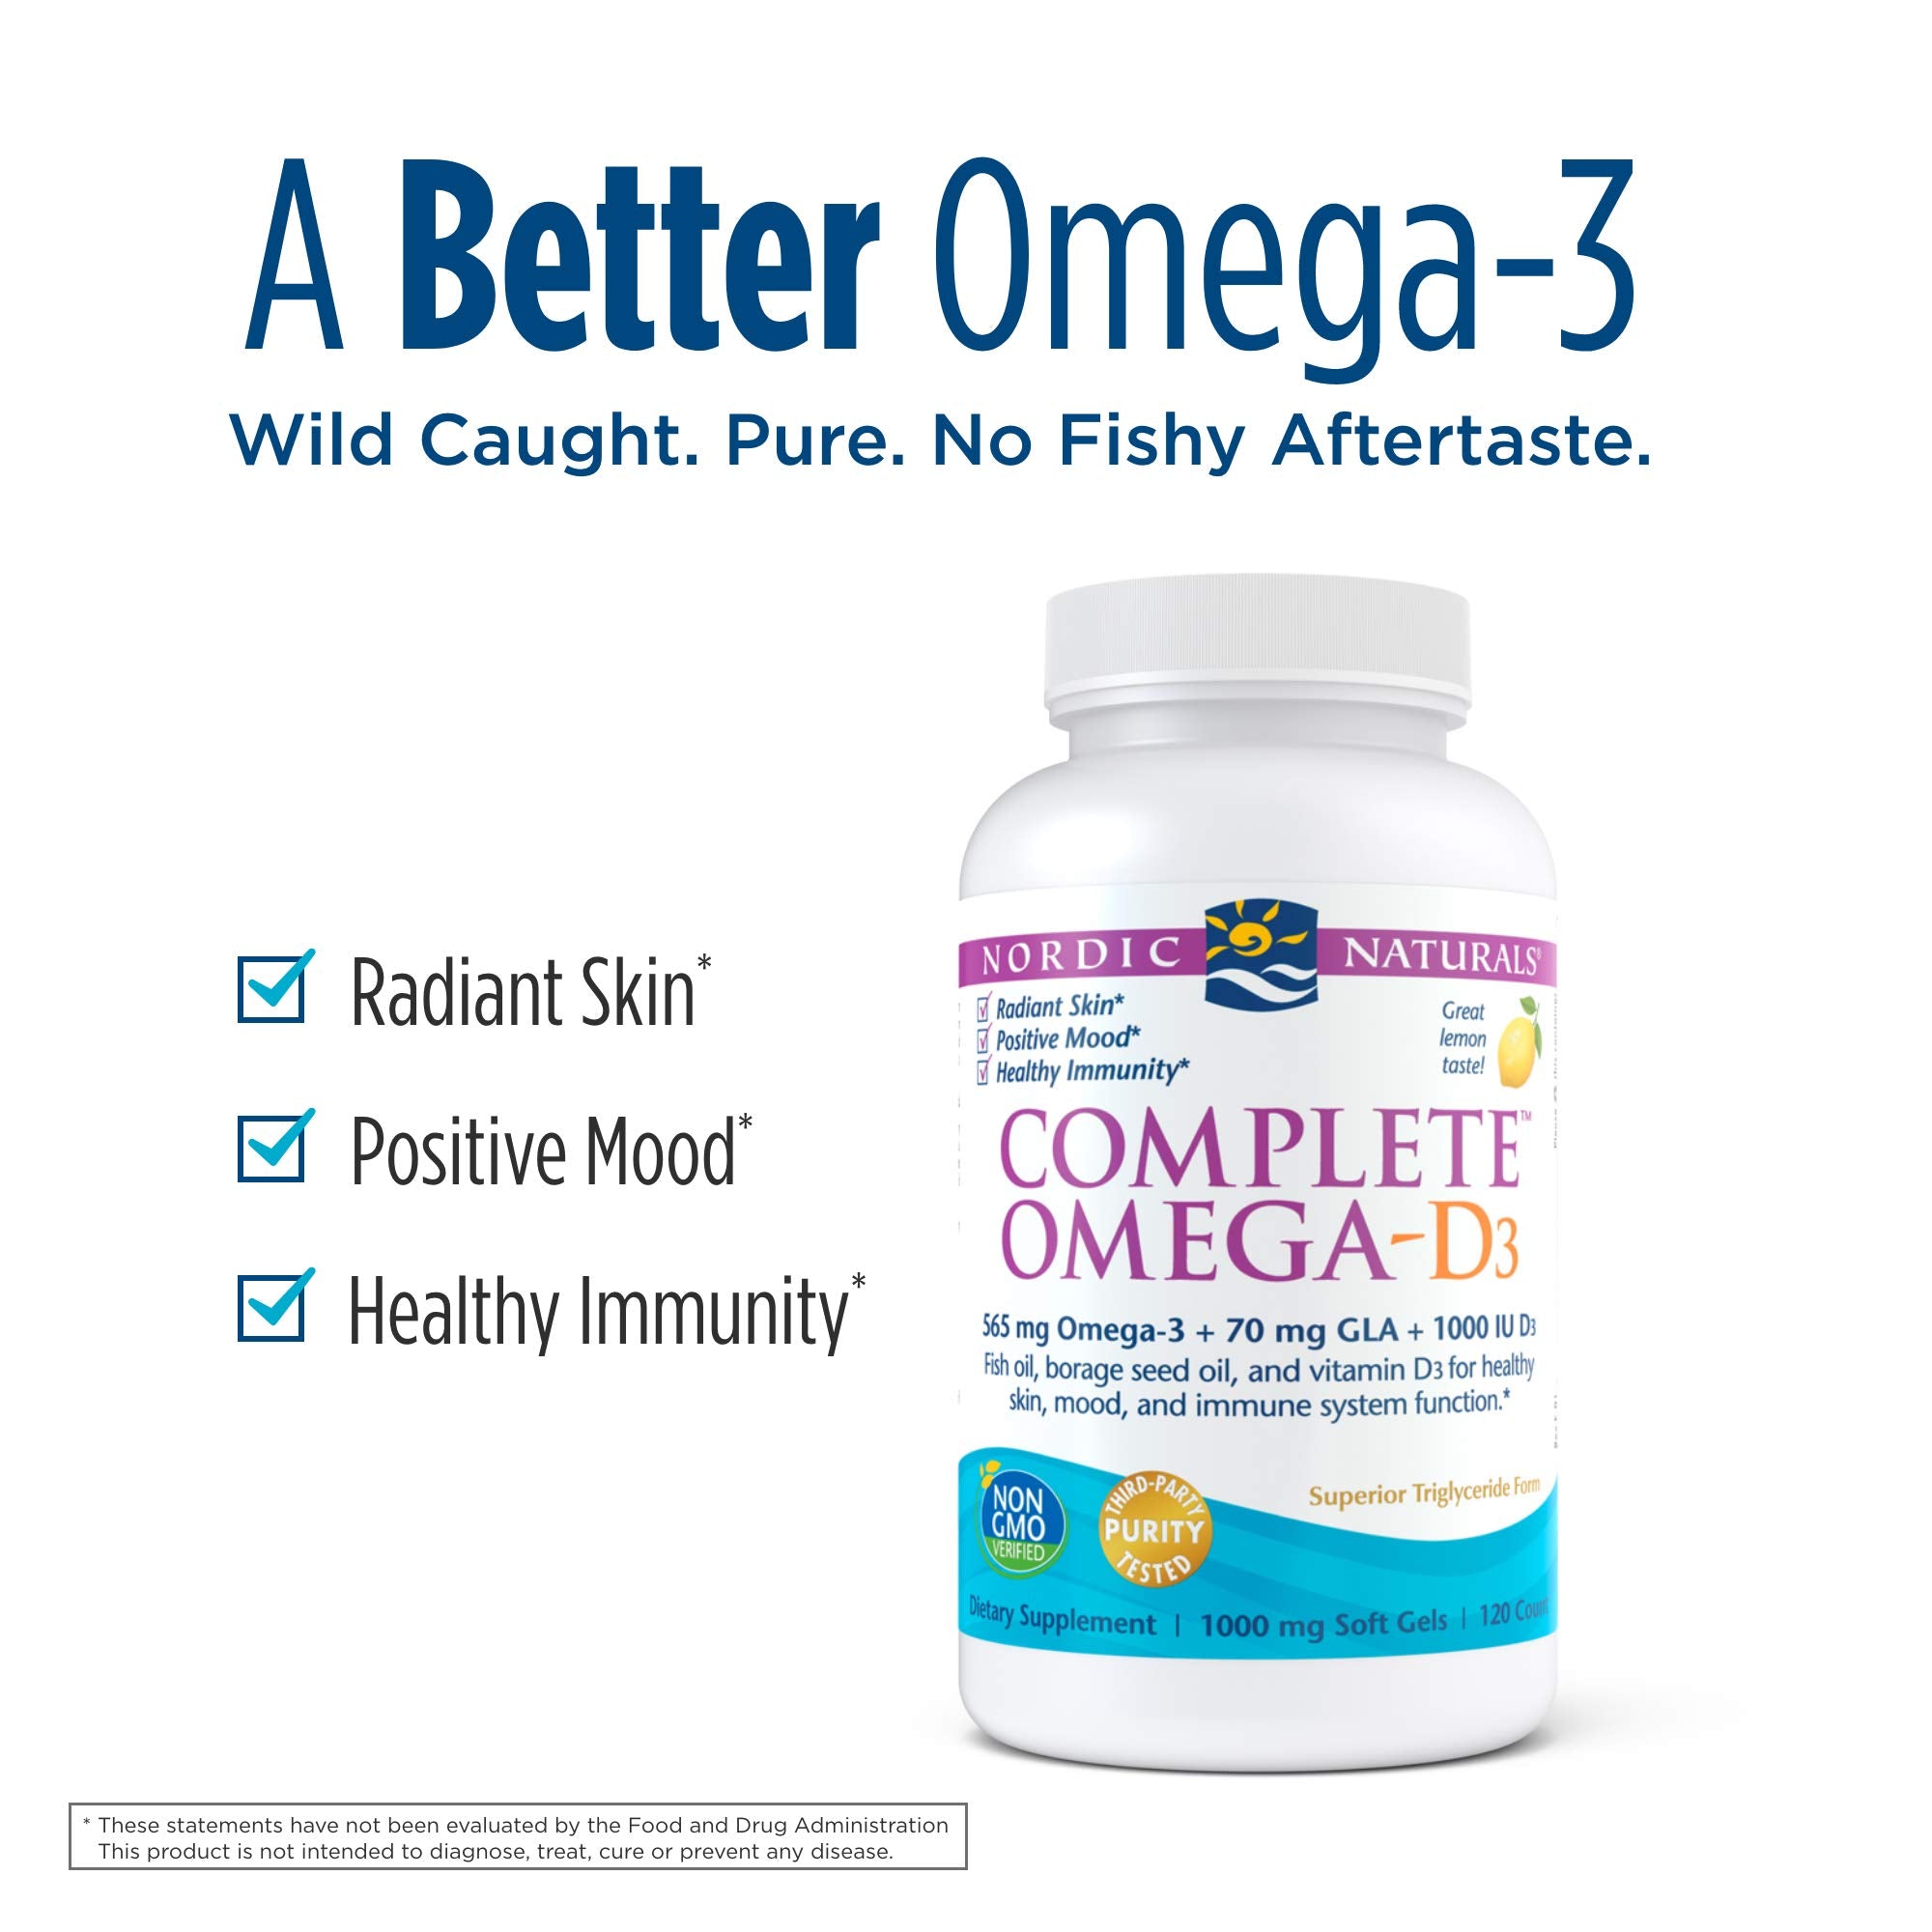 Nordic Naturals - Complete Omega-D3, Additional Bone, Mood, and Immune Support, 120 Soft Gels